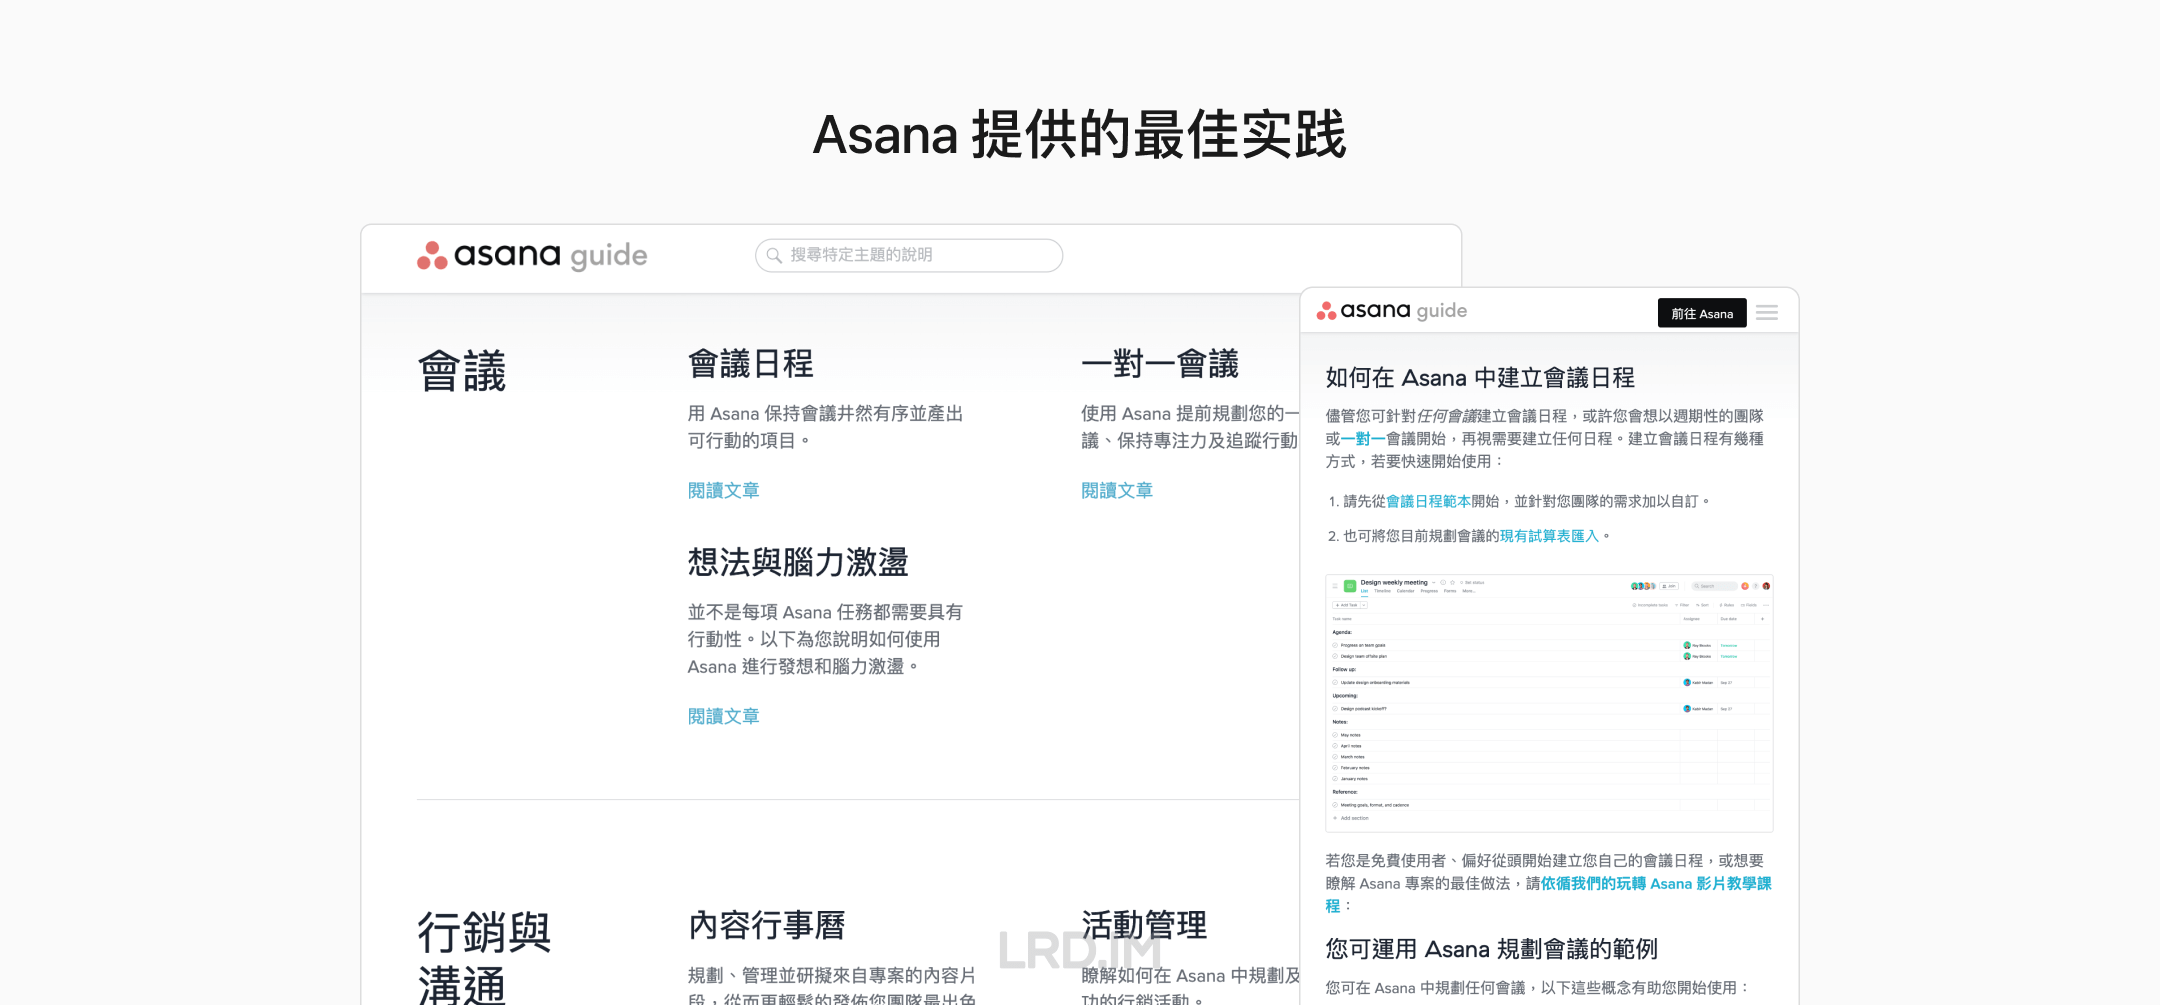 Asana 的最佳实践页面截图，由前后两张繁体中文界面的截图组成。其中前一张展示了如何在 Asana 中建立日程的相关步骤和做法；后一张则是最佳实践的页面截图，左侧是类型，右侧是网格排列的关于该类型的最佳实践。